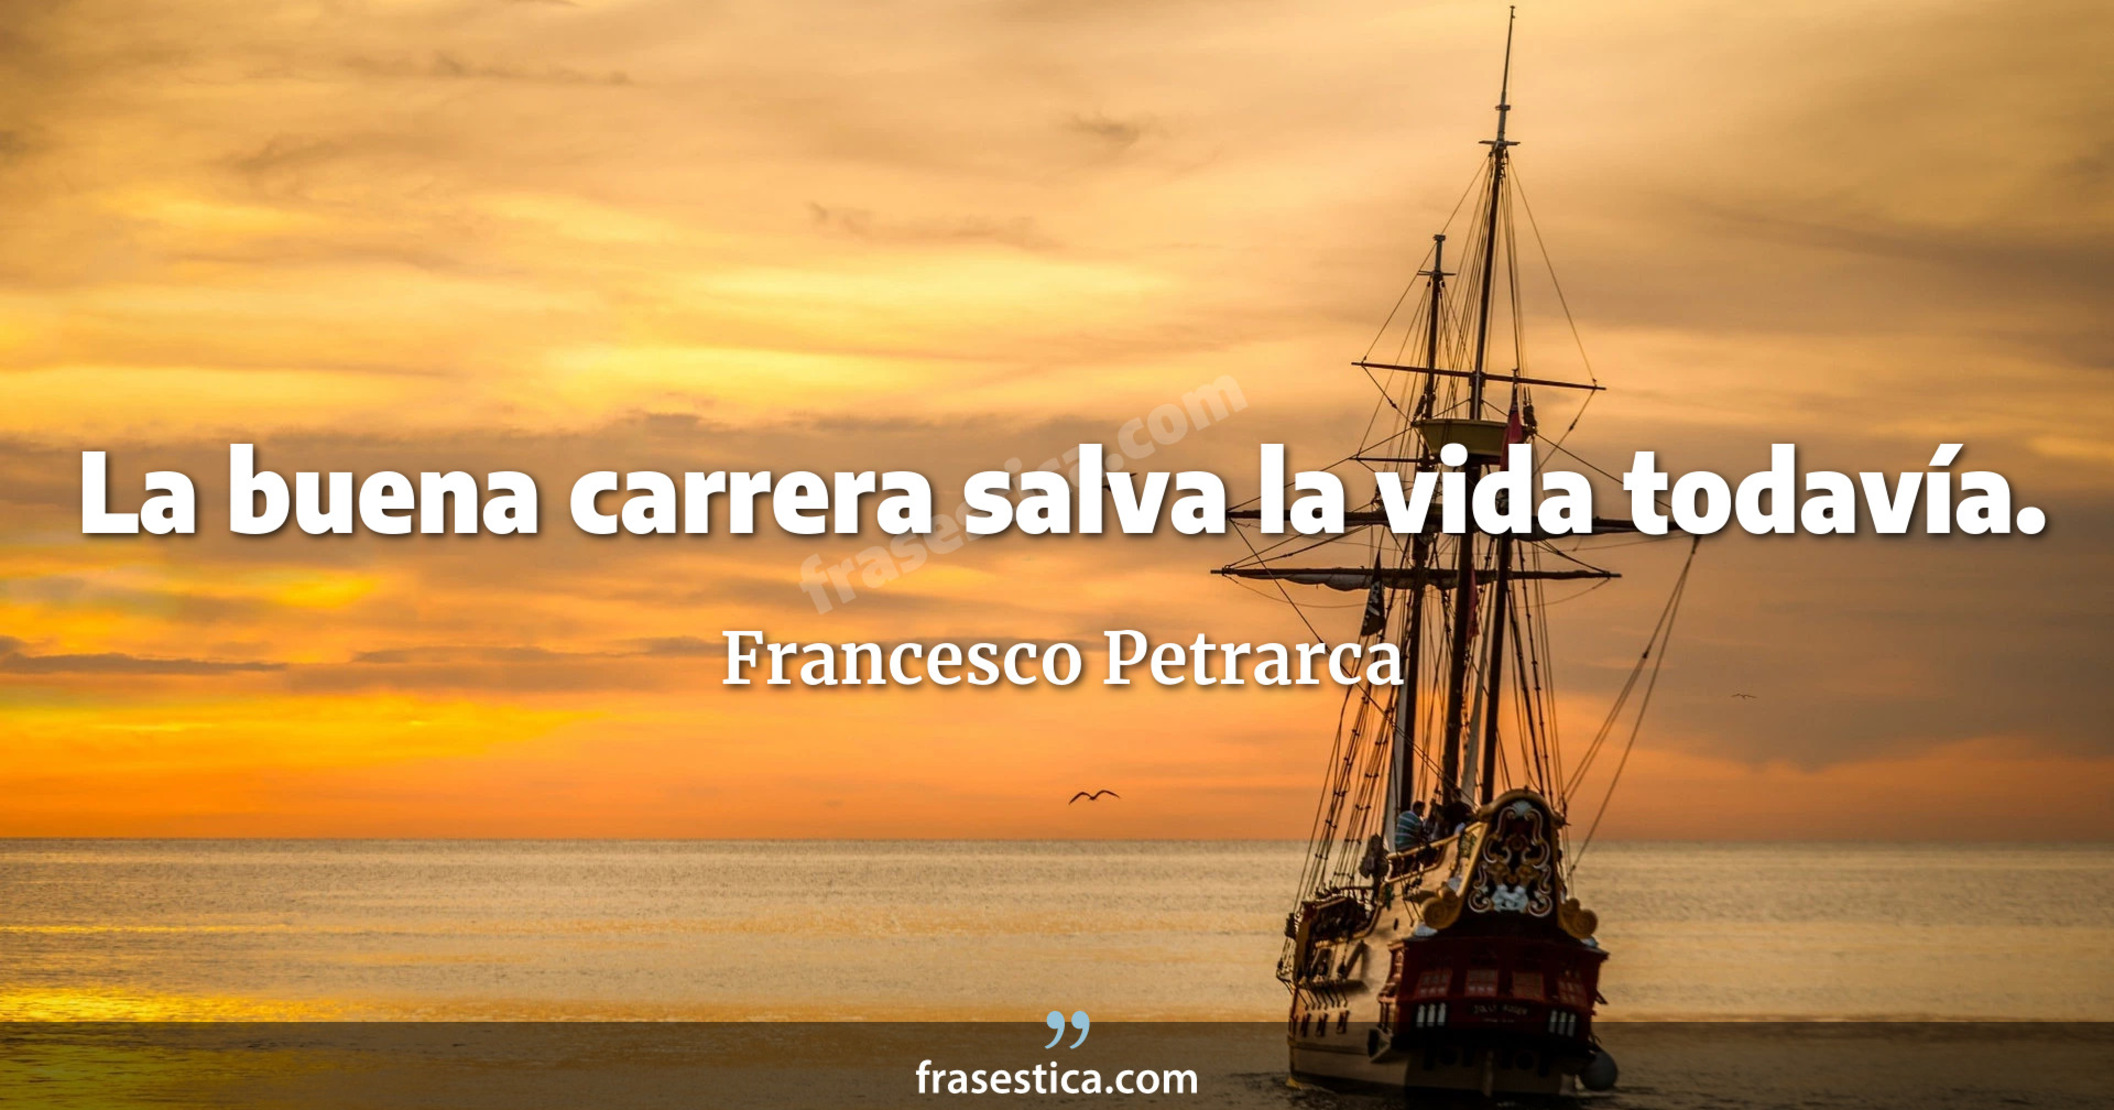 La buena carrera salva la vida todavía. - Francesco Petrarca